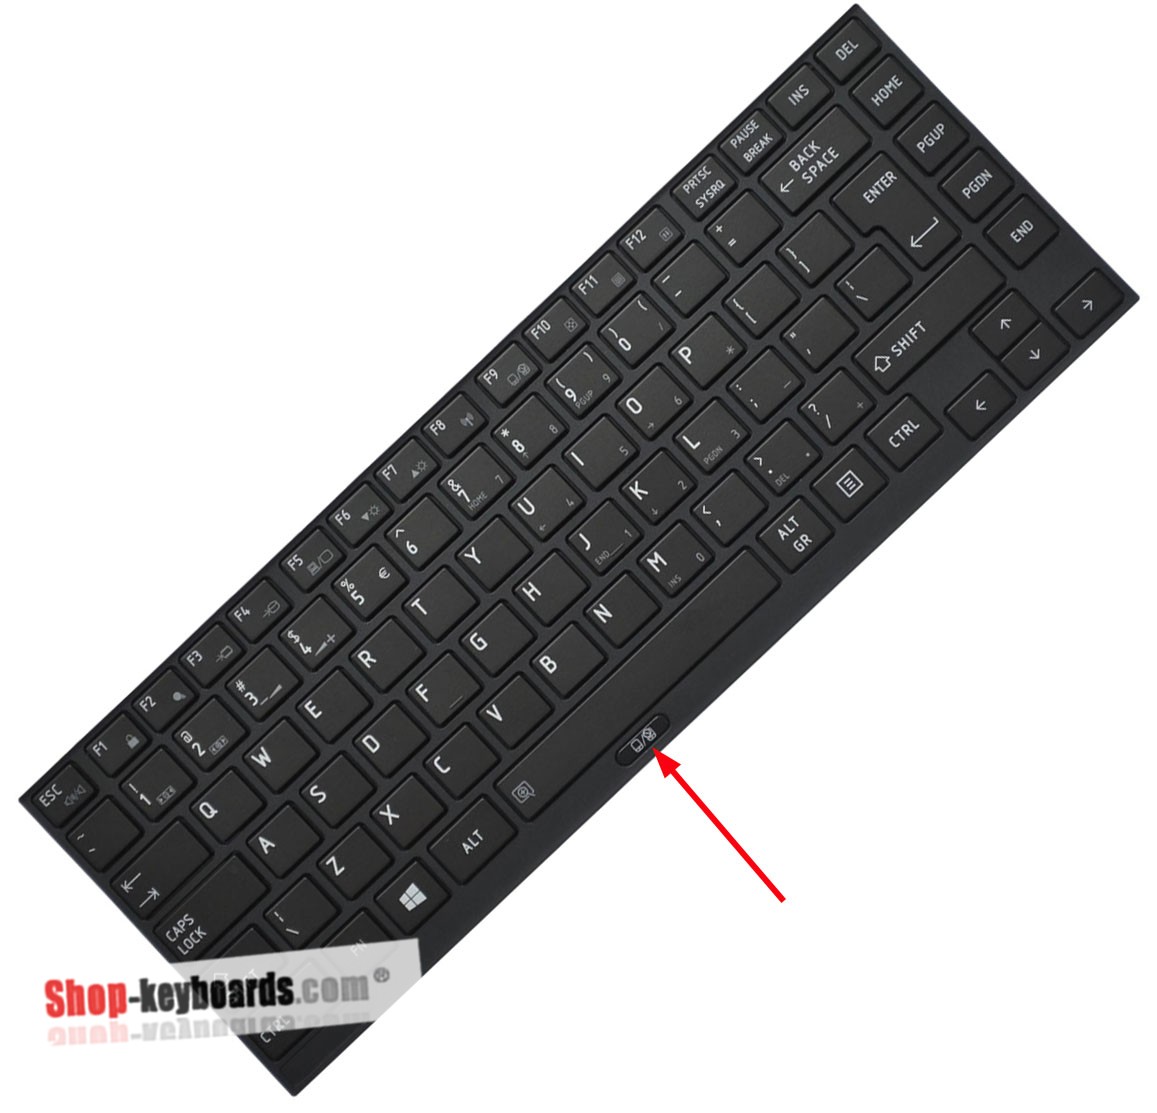 Toshiba PORTEGE R830-S8312  Keyboard replacement